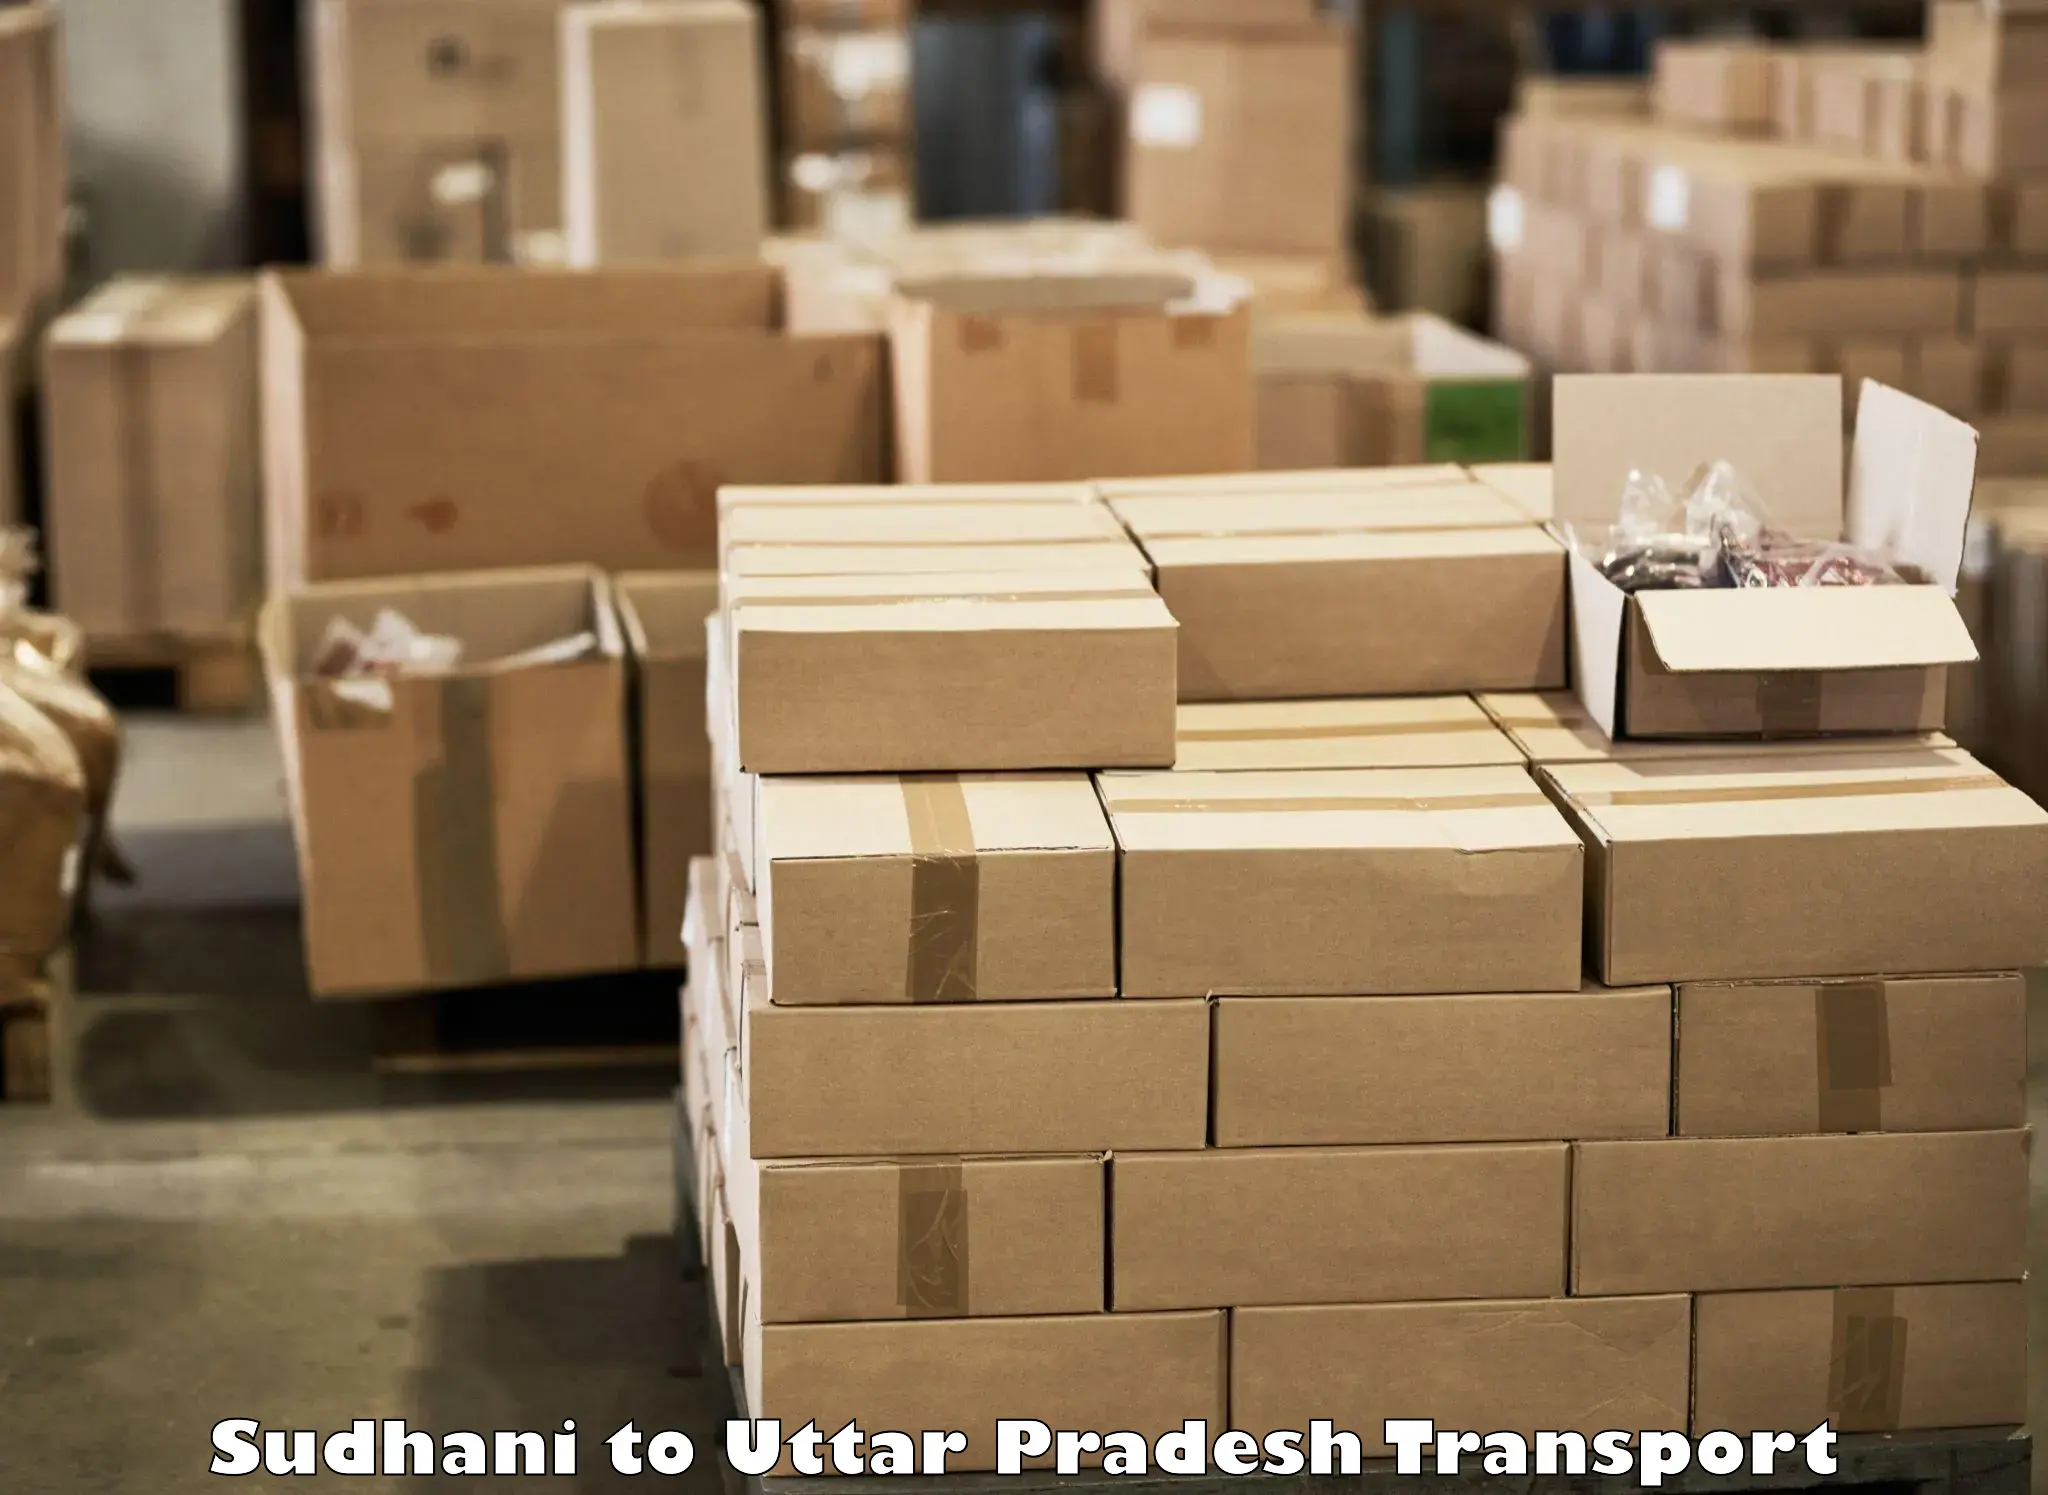 Truck transport companies in India Sudhani to Itava